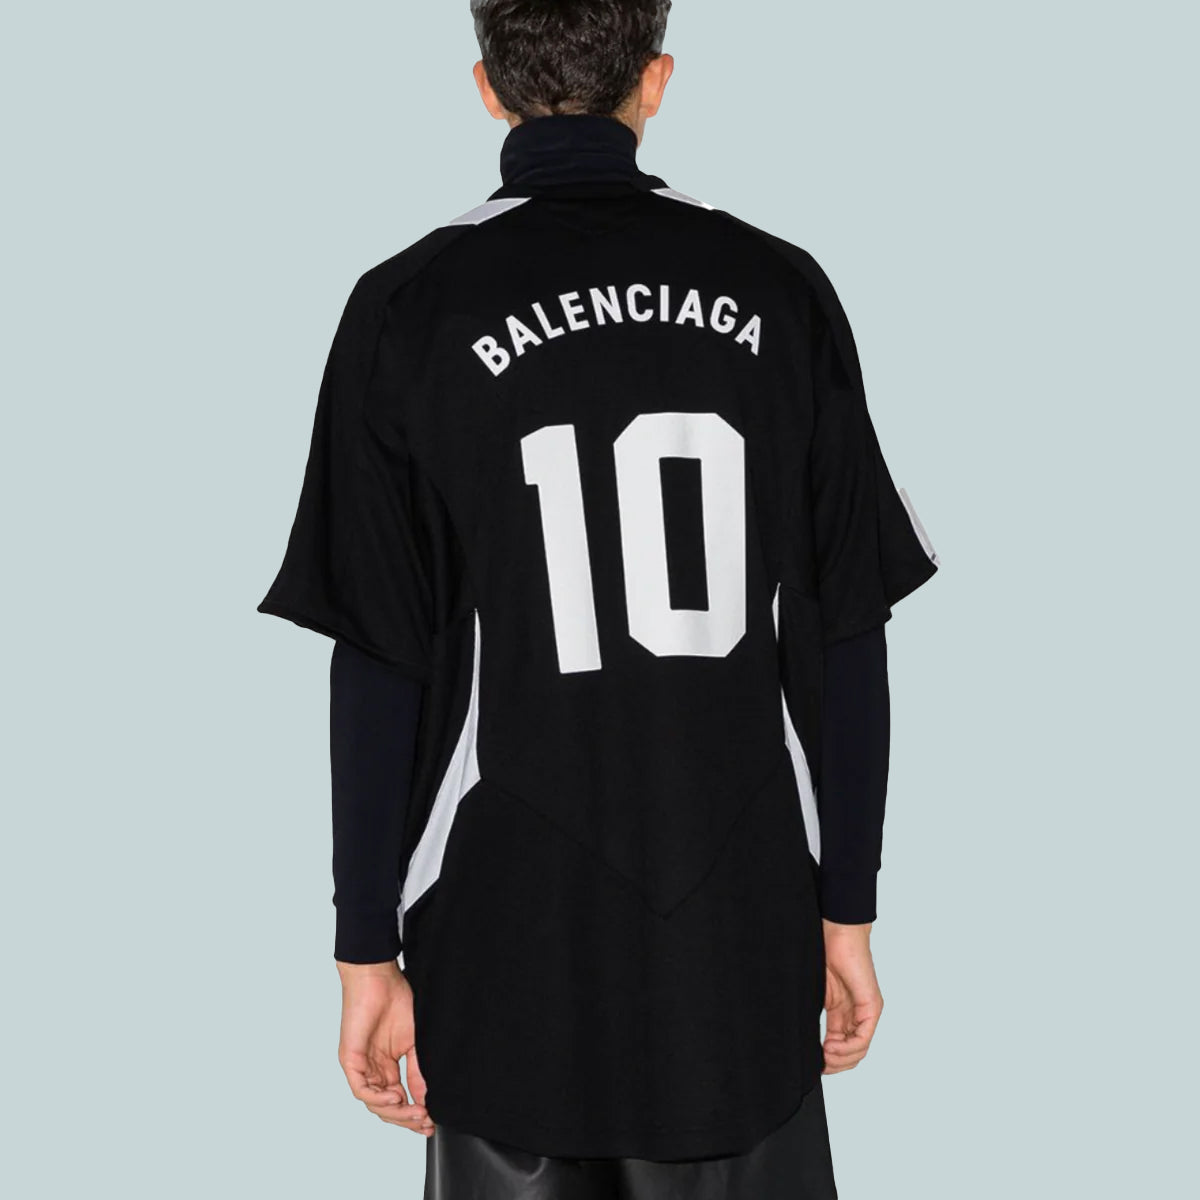 SS Soccer shirt black